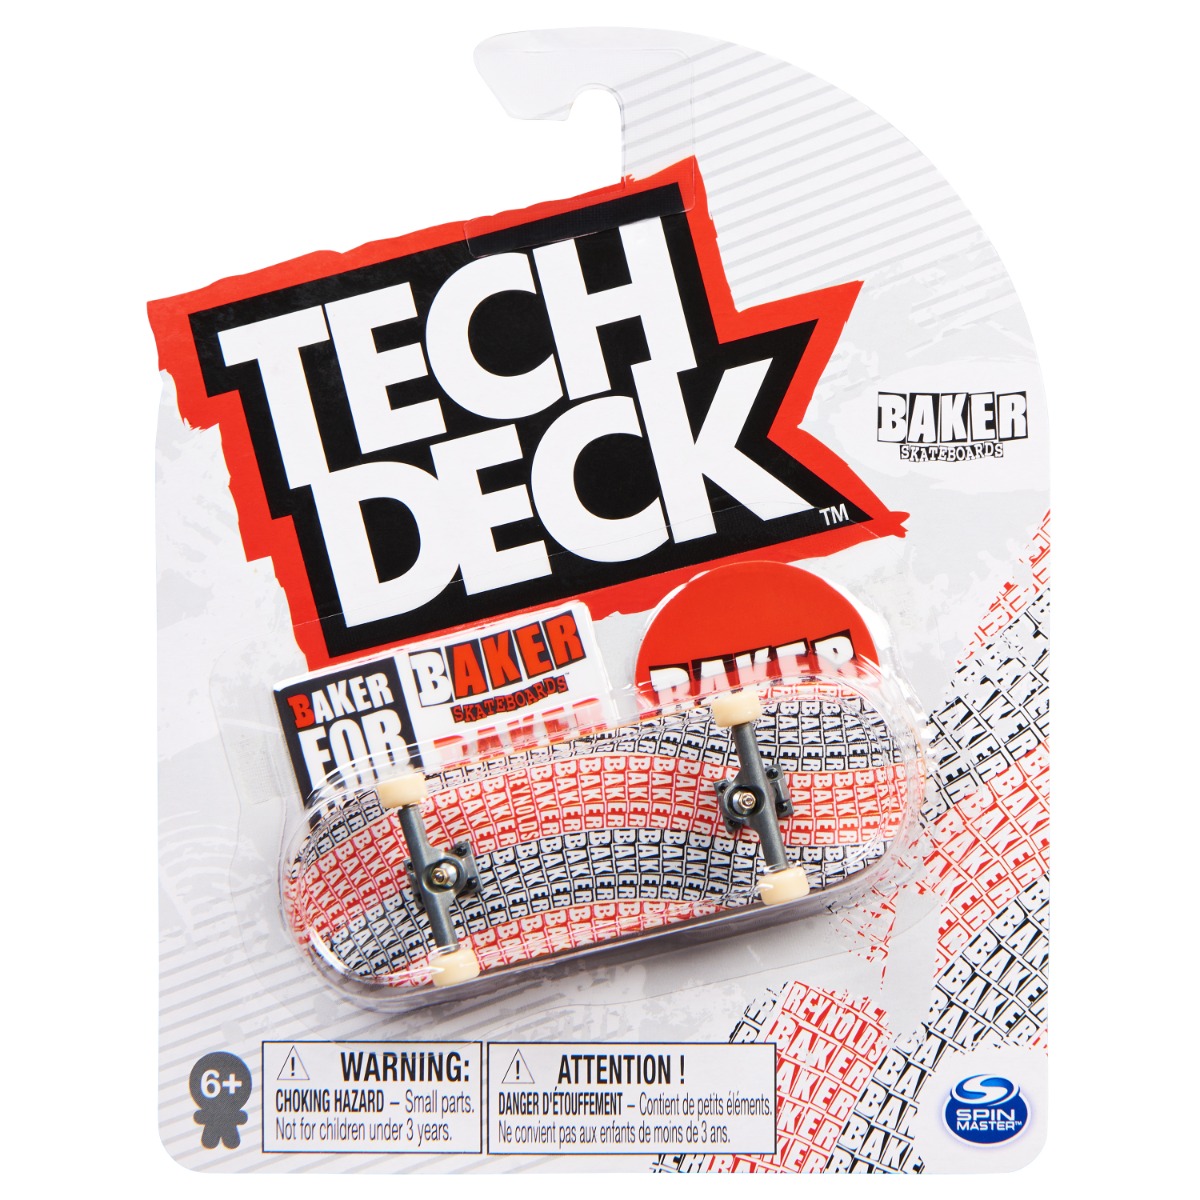 Mini placa skateboard Tech Deck, Baker, 20141362